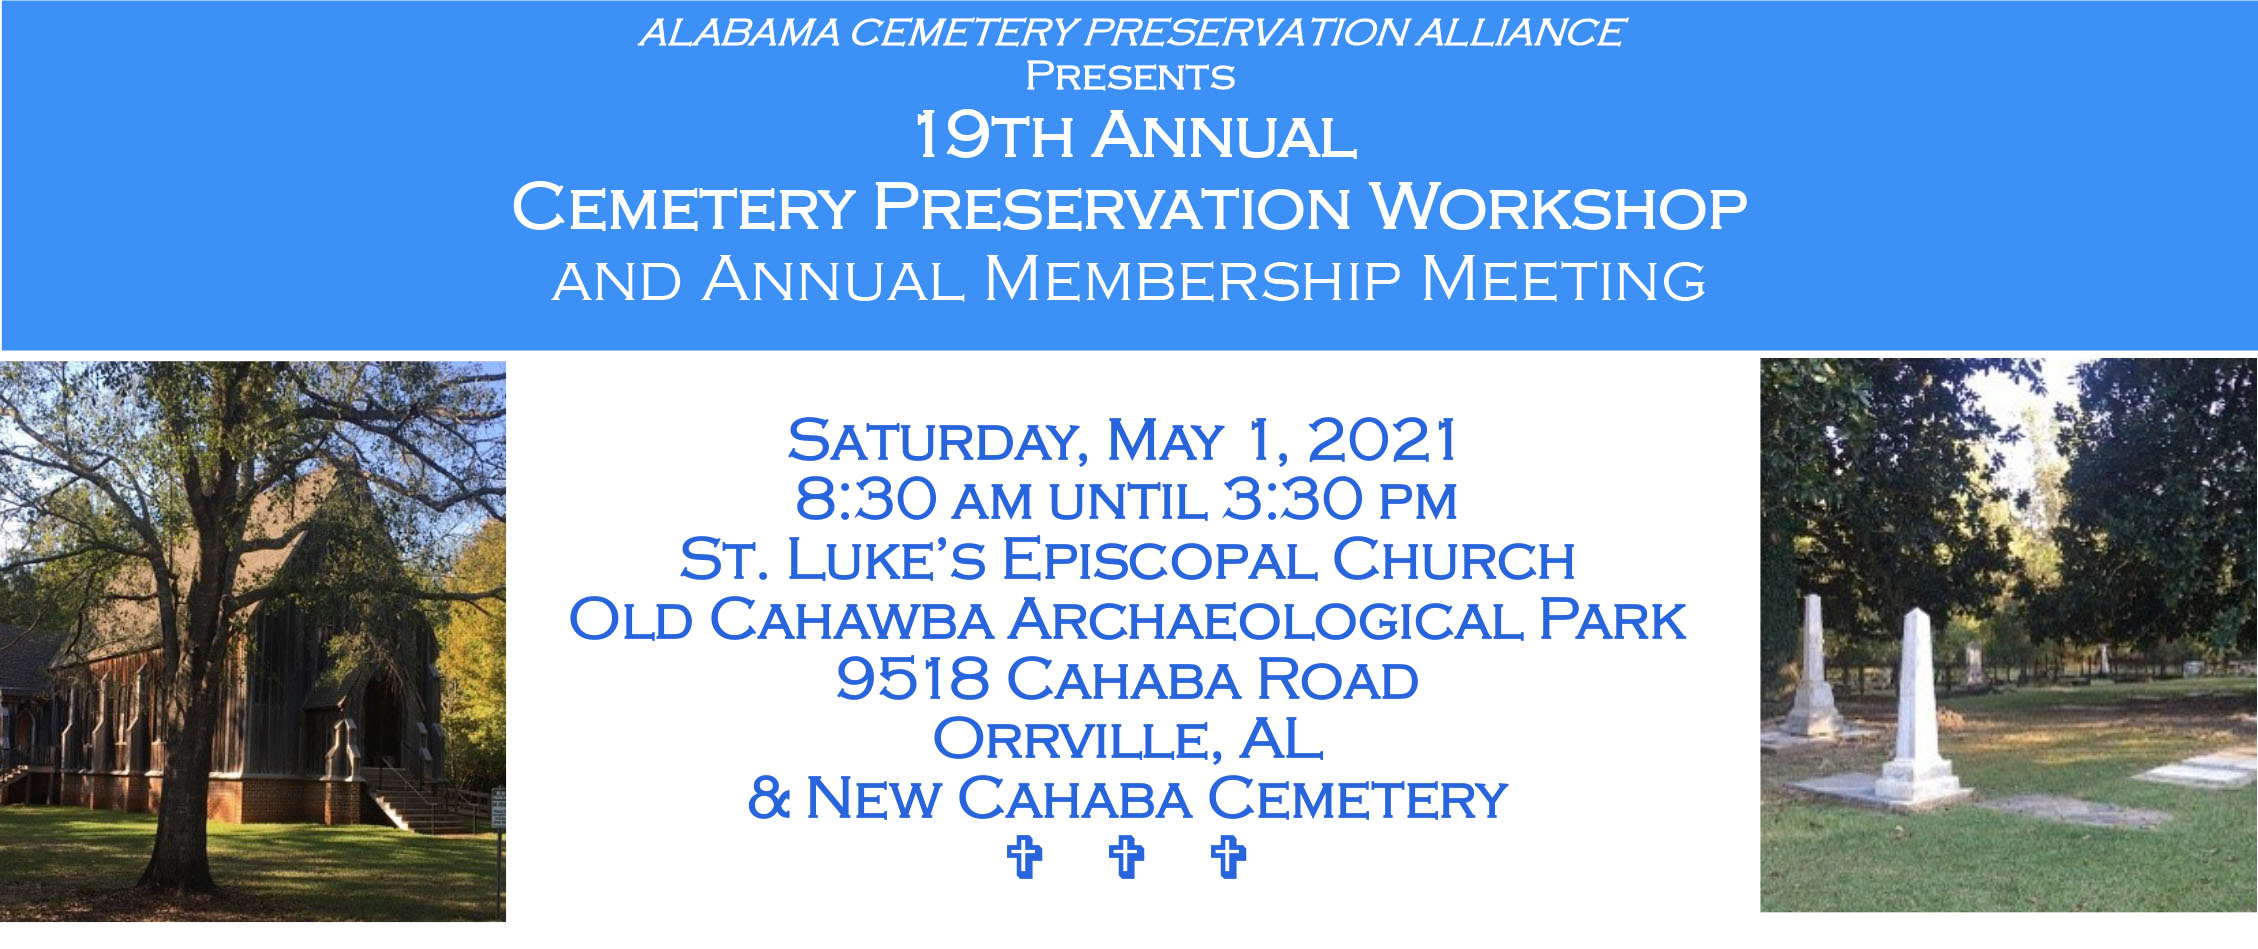 Alabama Cemetery Preservation Alliance